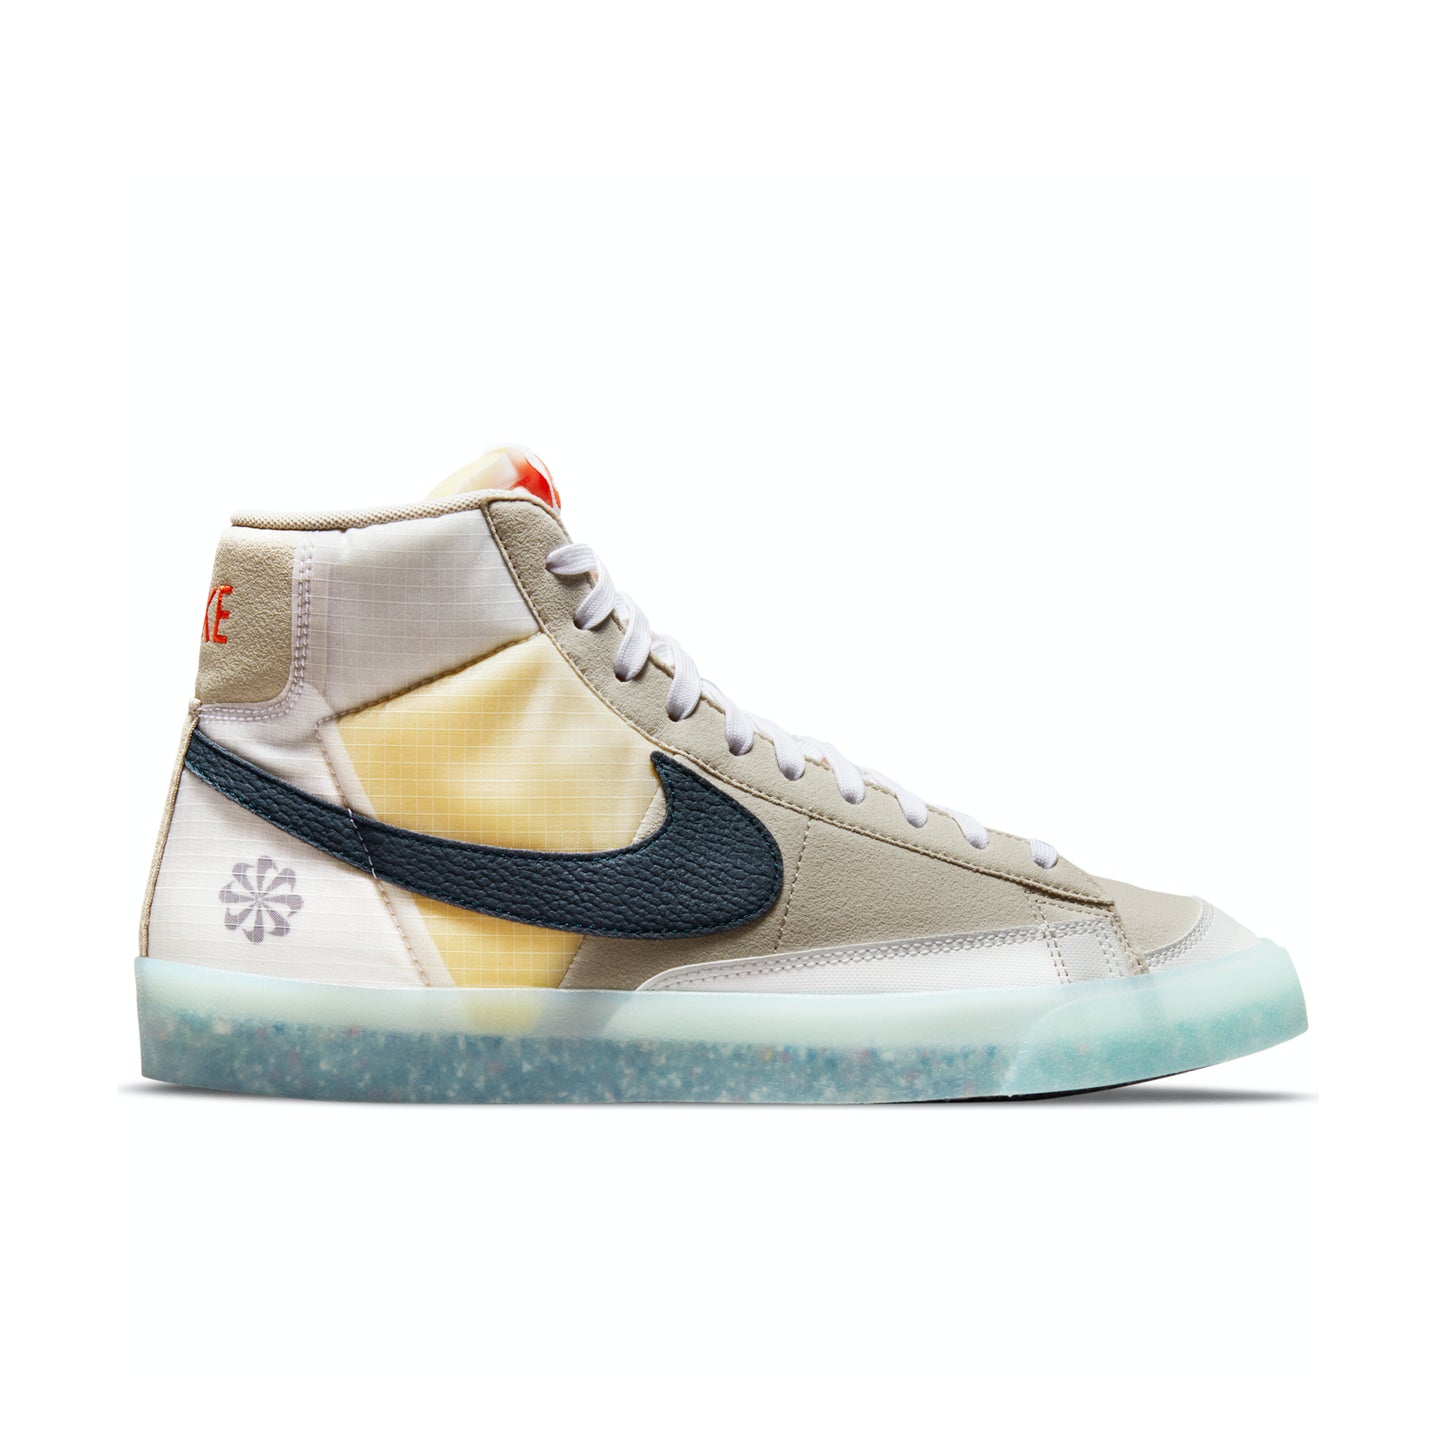 Nike Blazer Mid '77 Move to Zero "Glacier Ice"